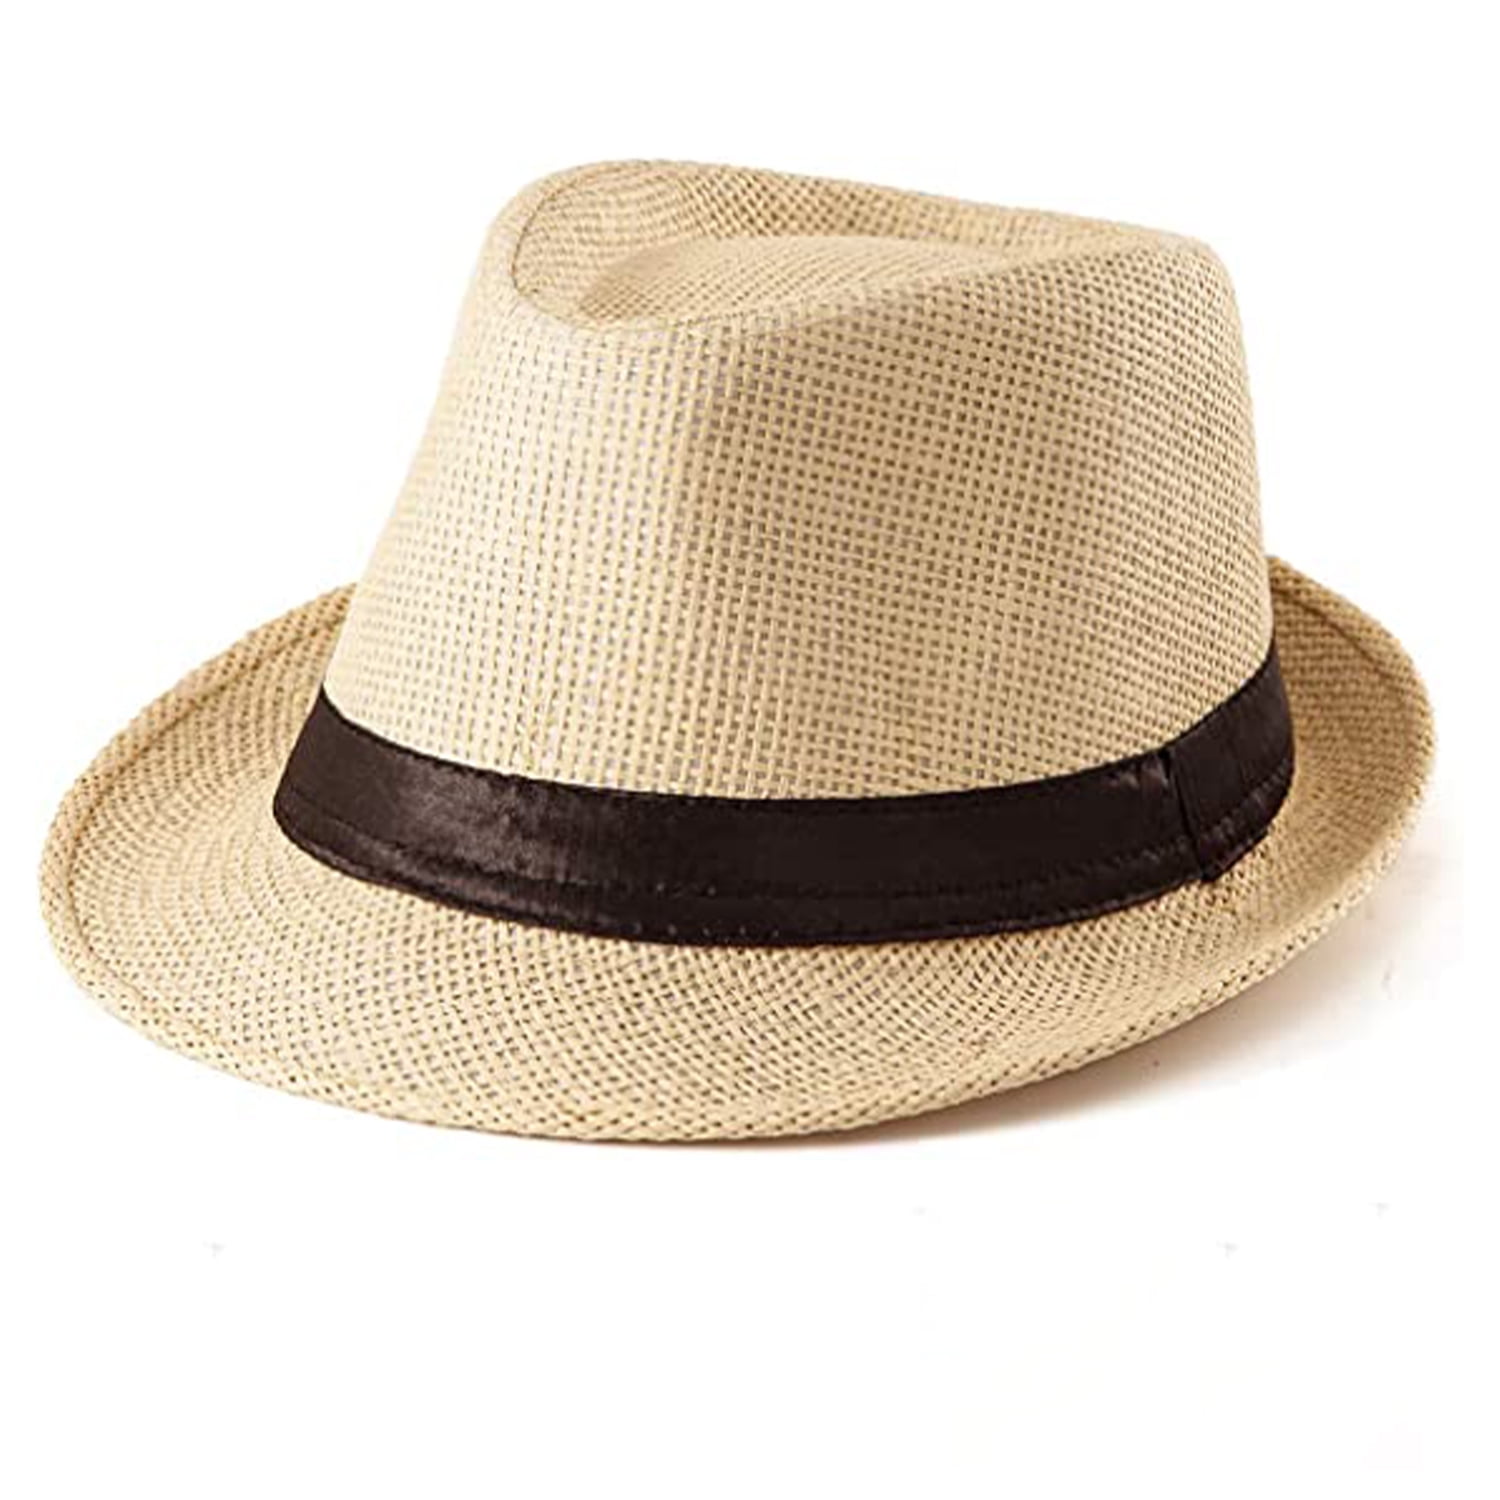 Yorcoten Summer Straw Beach Fedora Hat for Women Men Sun Panama